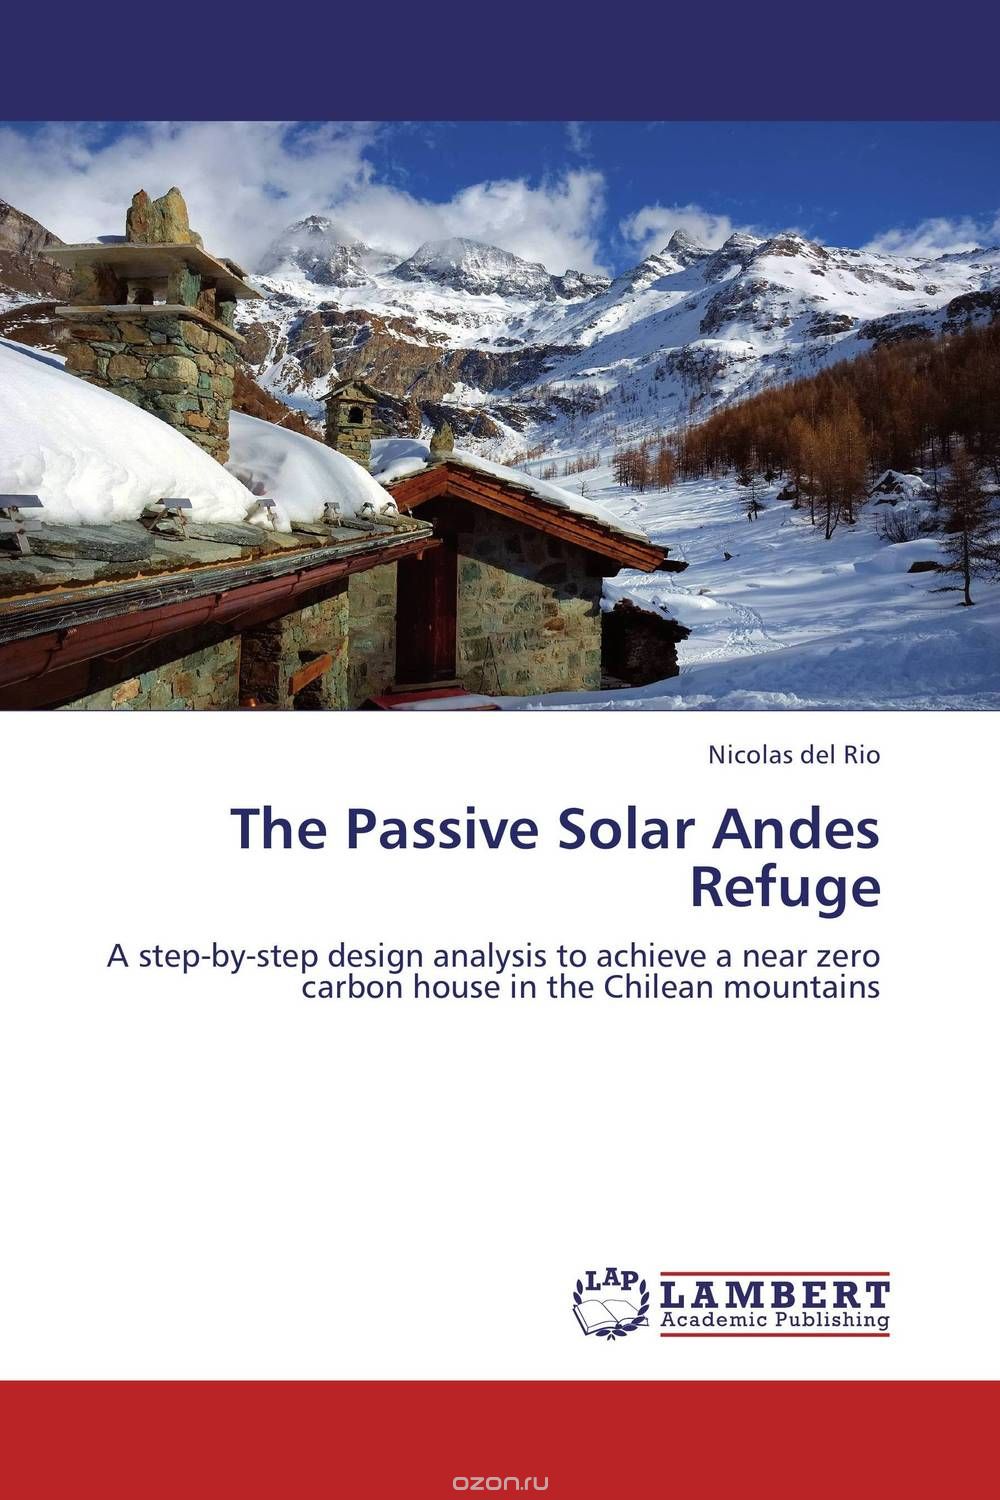 Скачать книгу "The Passive Solar Andes Refuge"